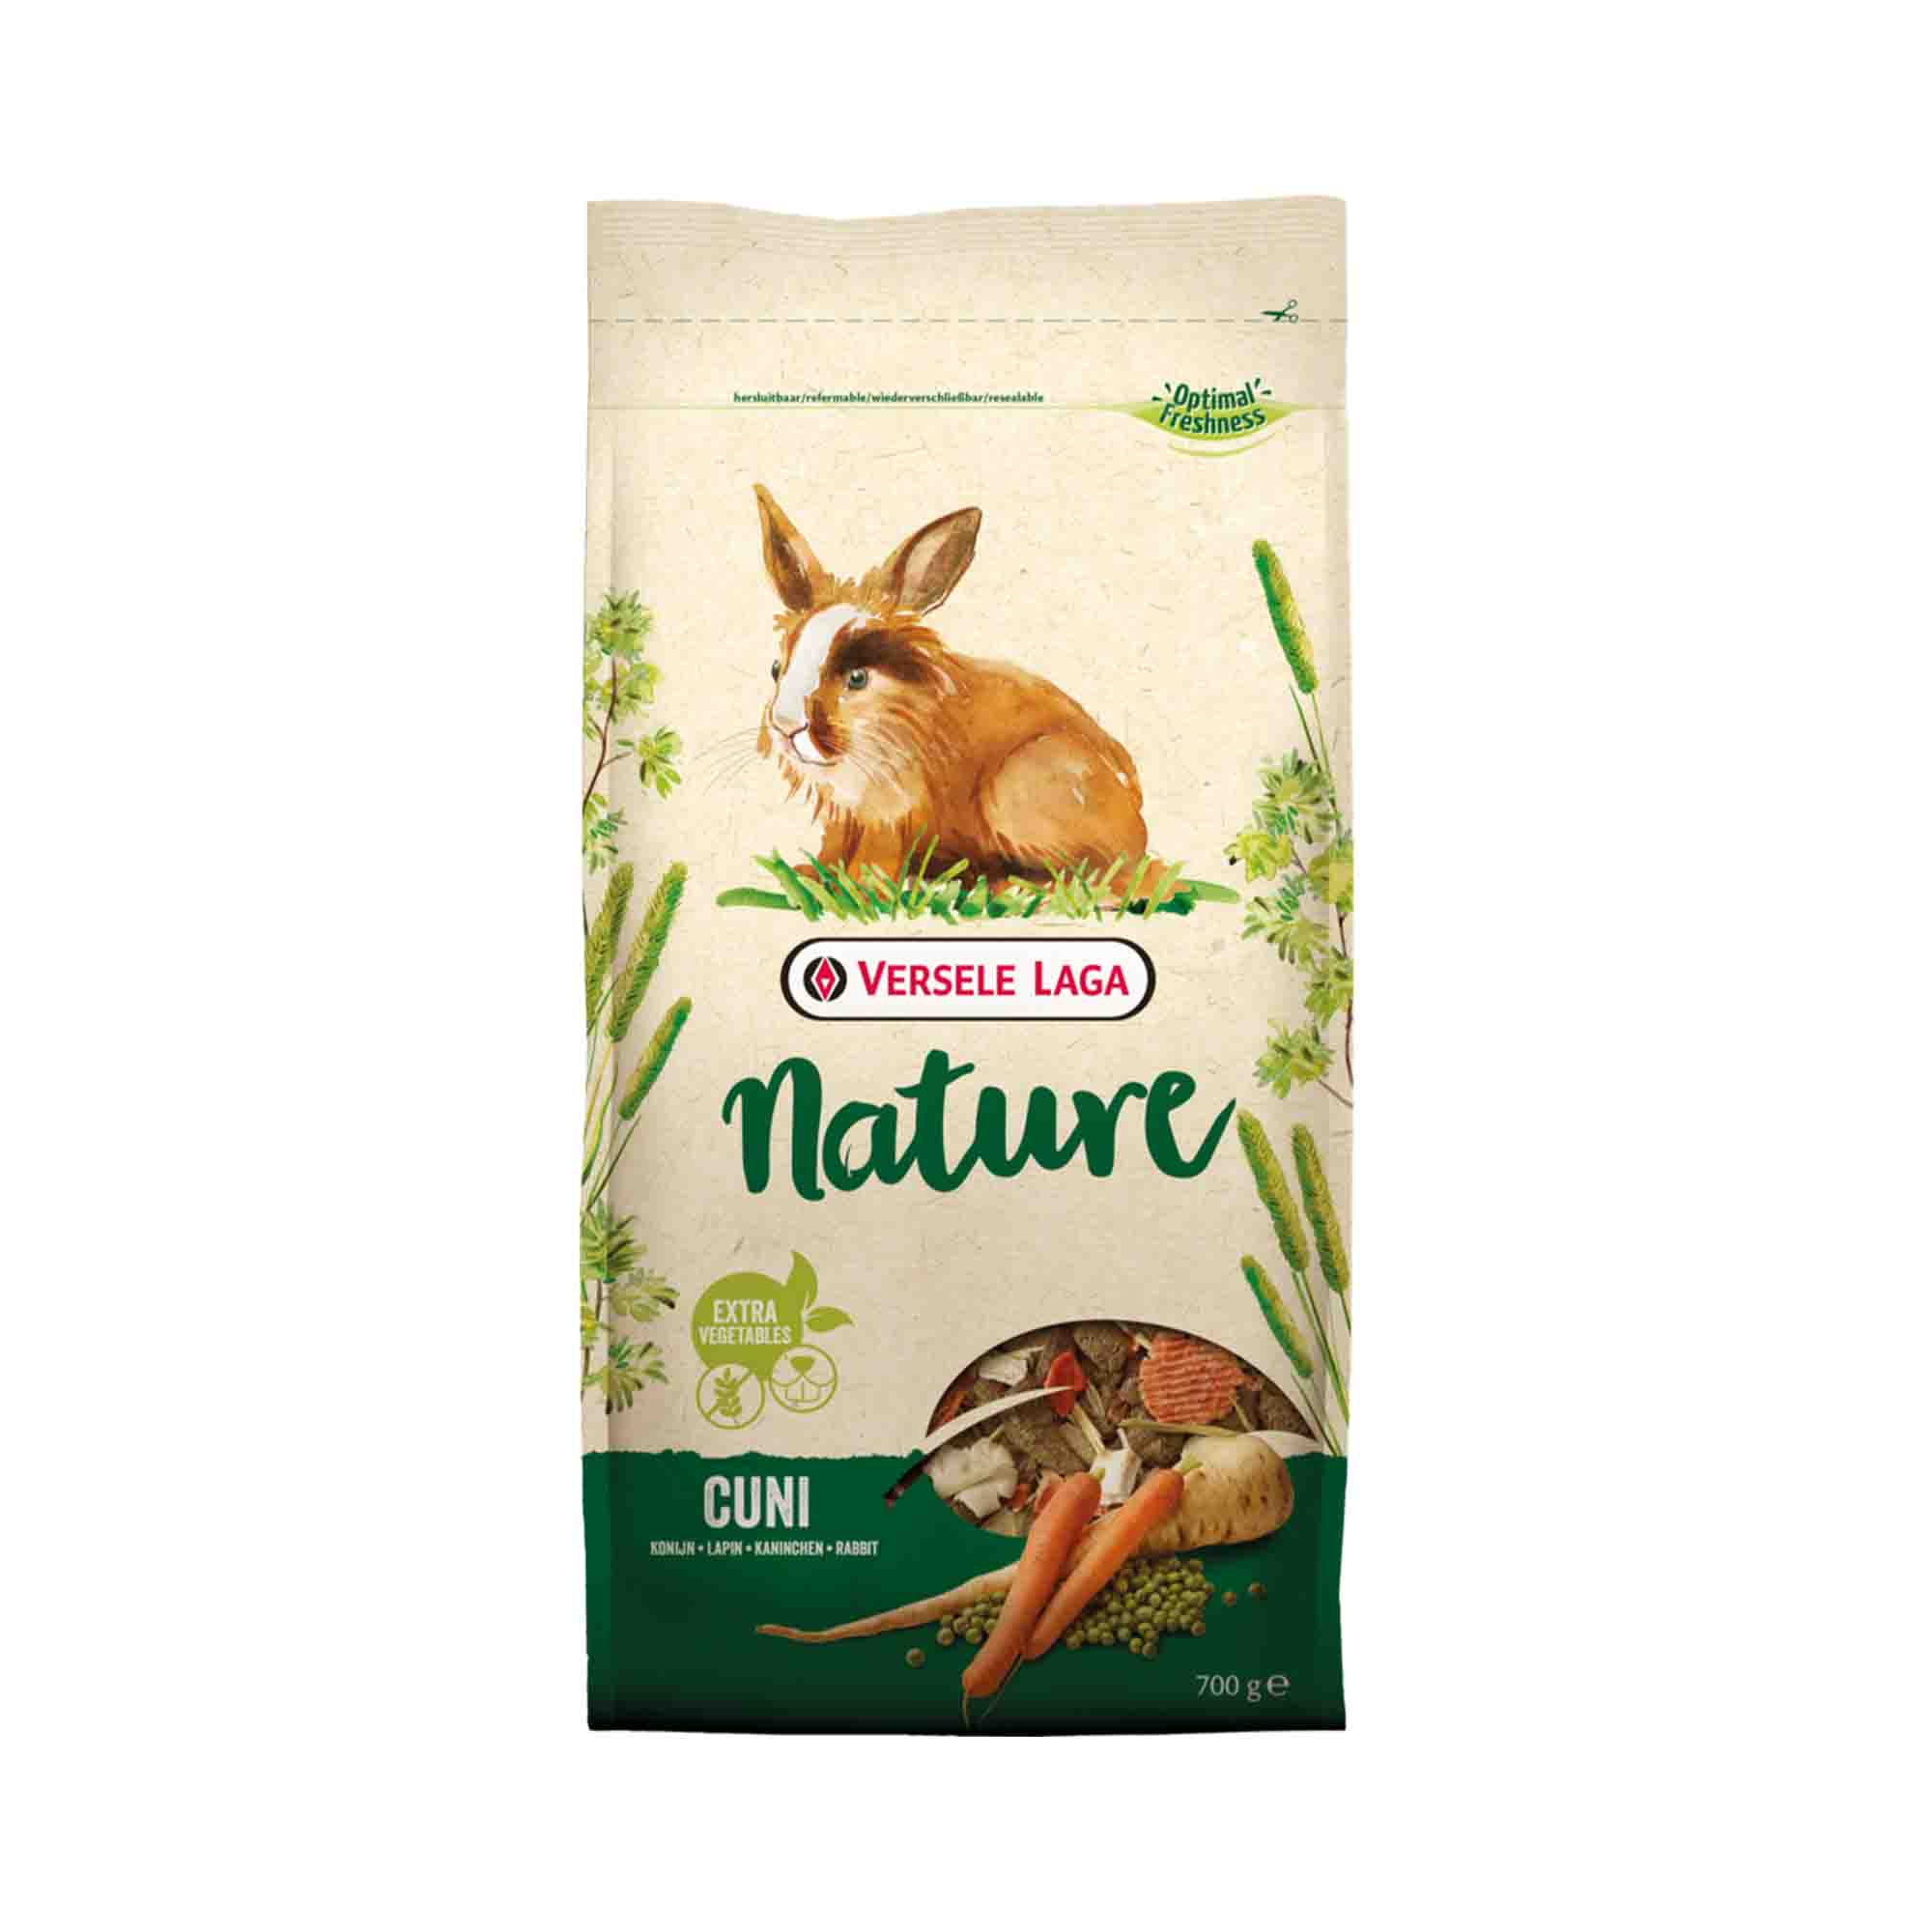 Versele-Laga Nature Cuni rabbit food